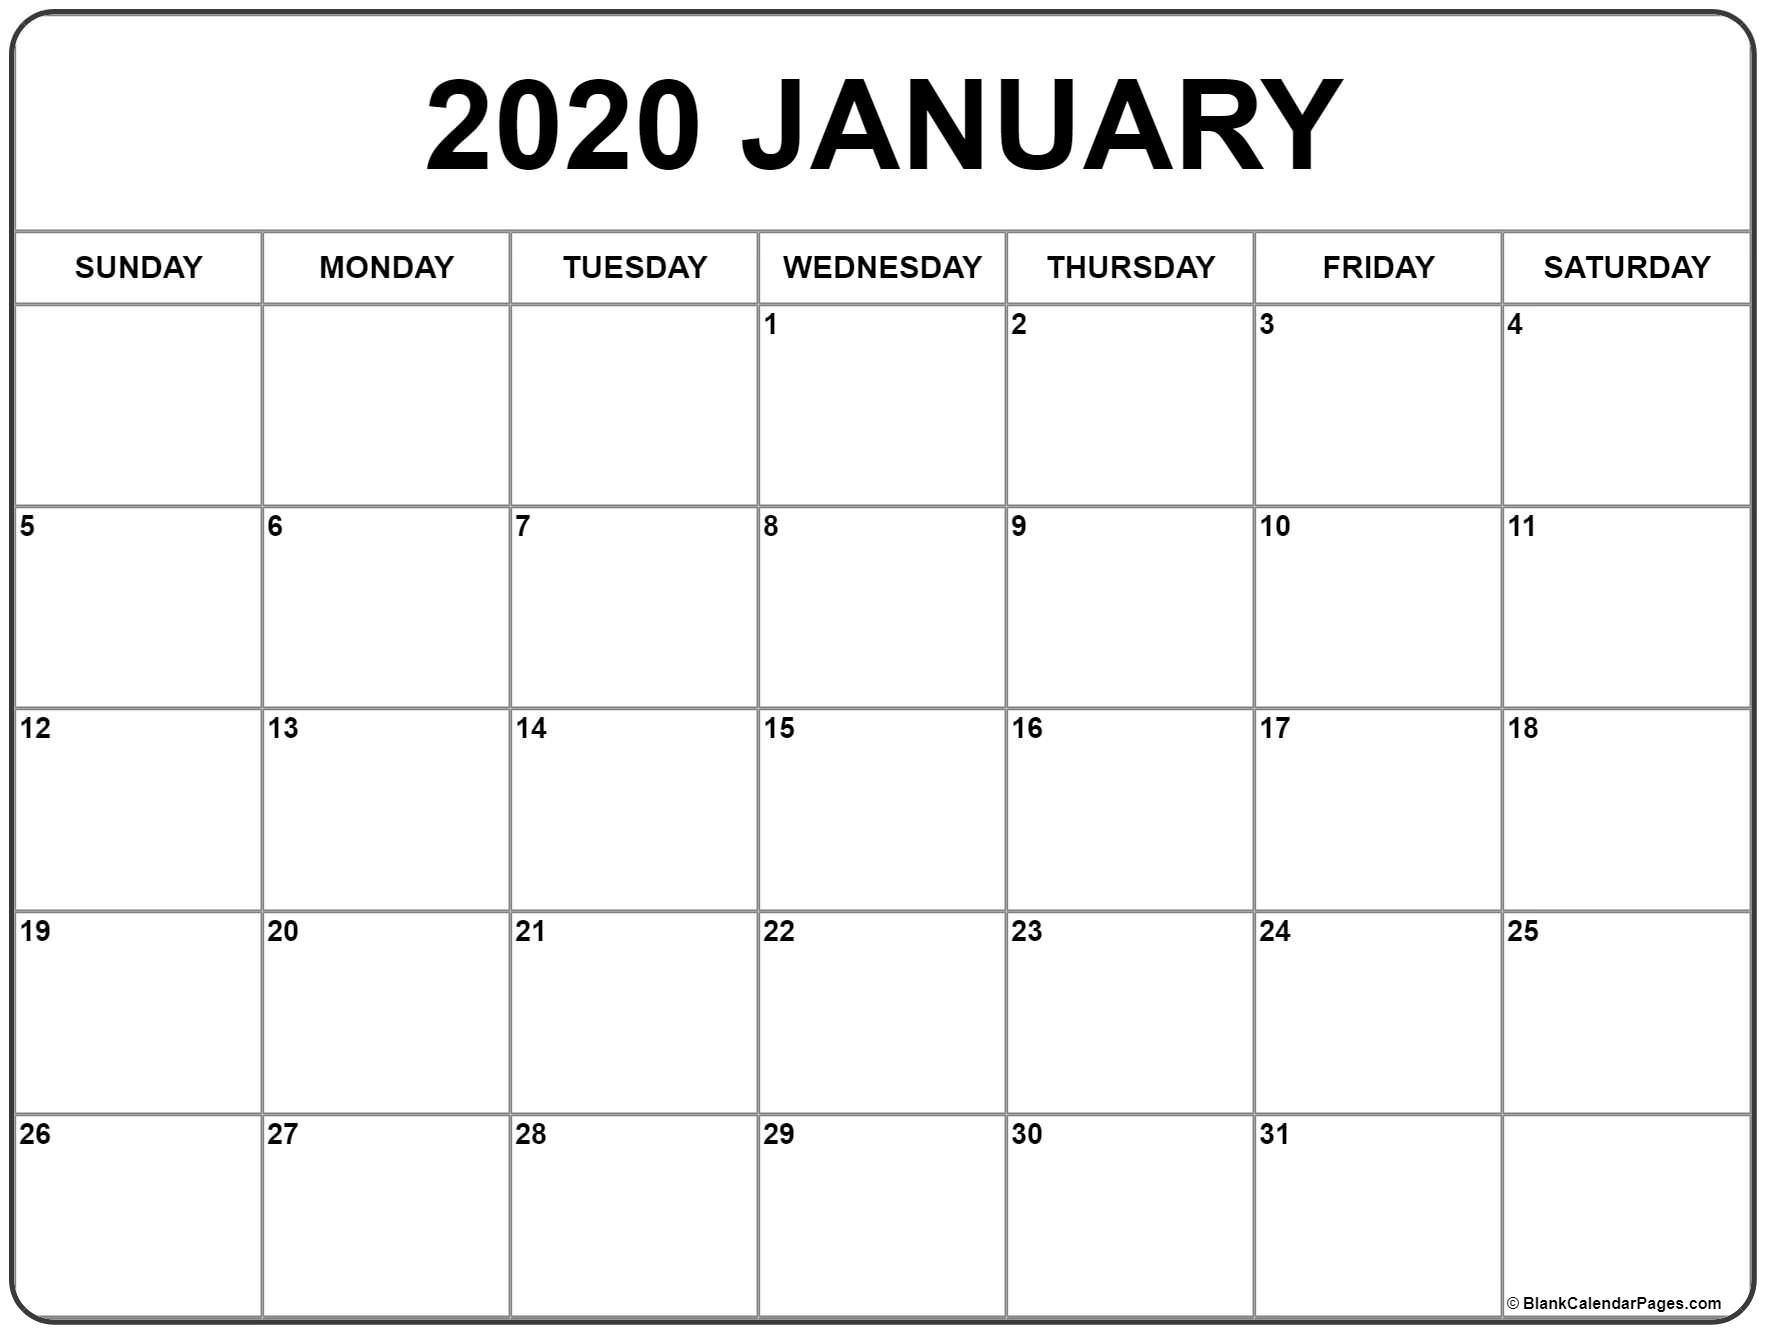 January 2020 Calendar | Free Printable Monthly Calendars-January 2020 Calendar Free